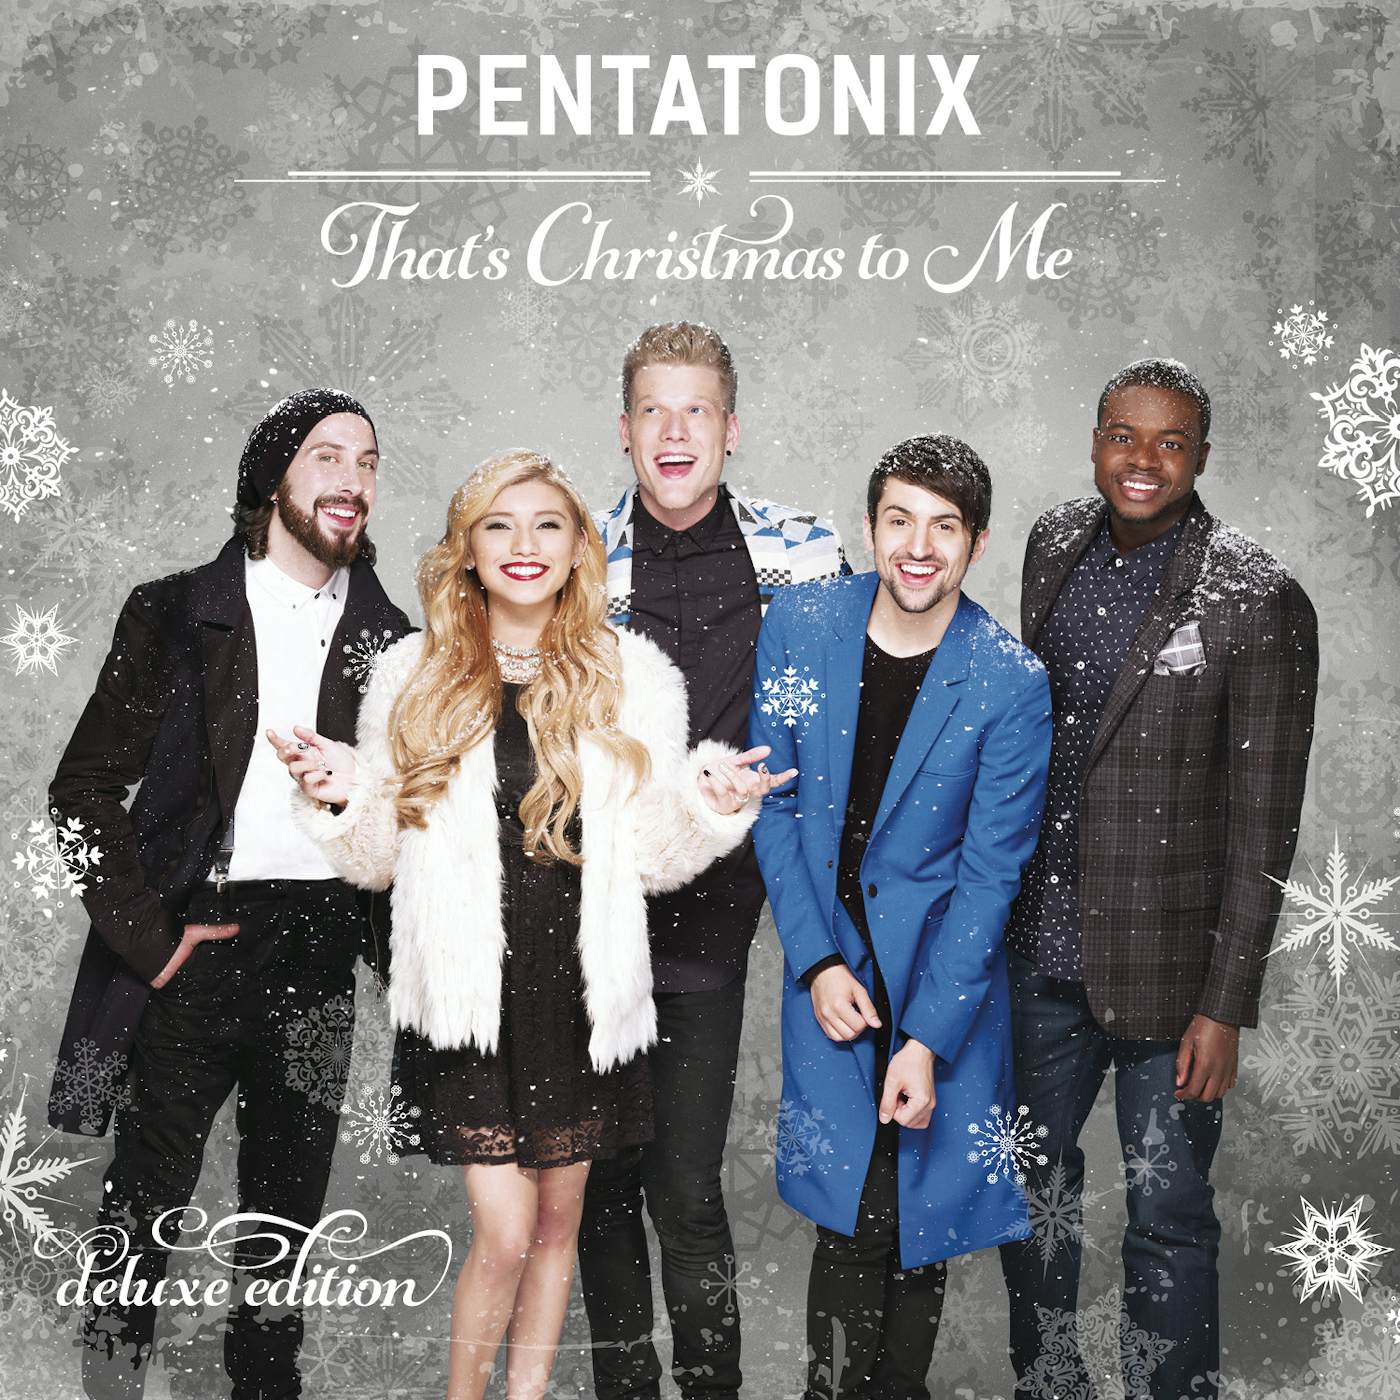 Pentatonix THAT'S CHRISTMAS TO ME CD